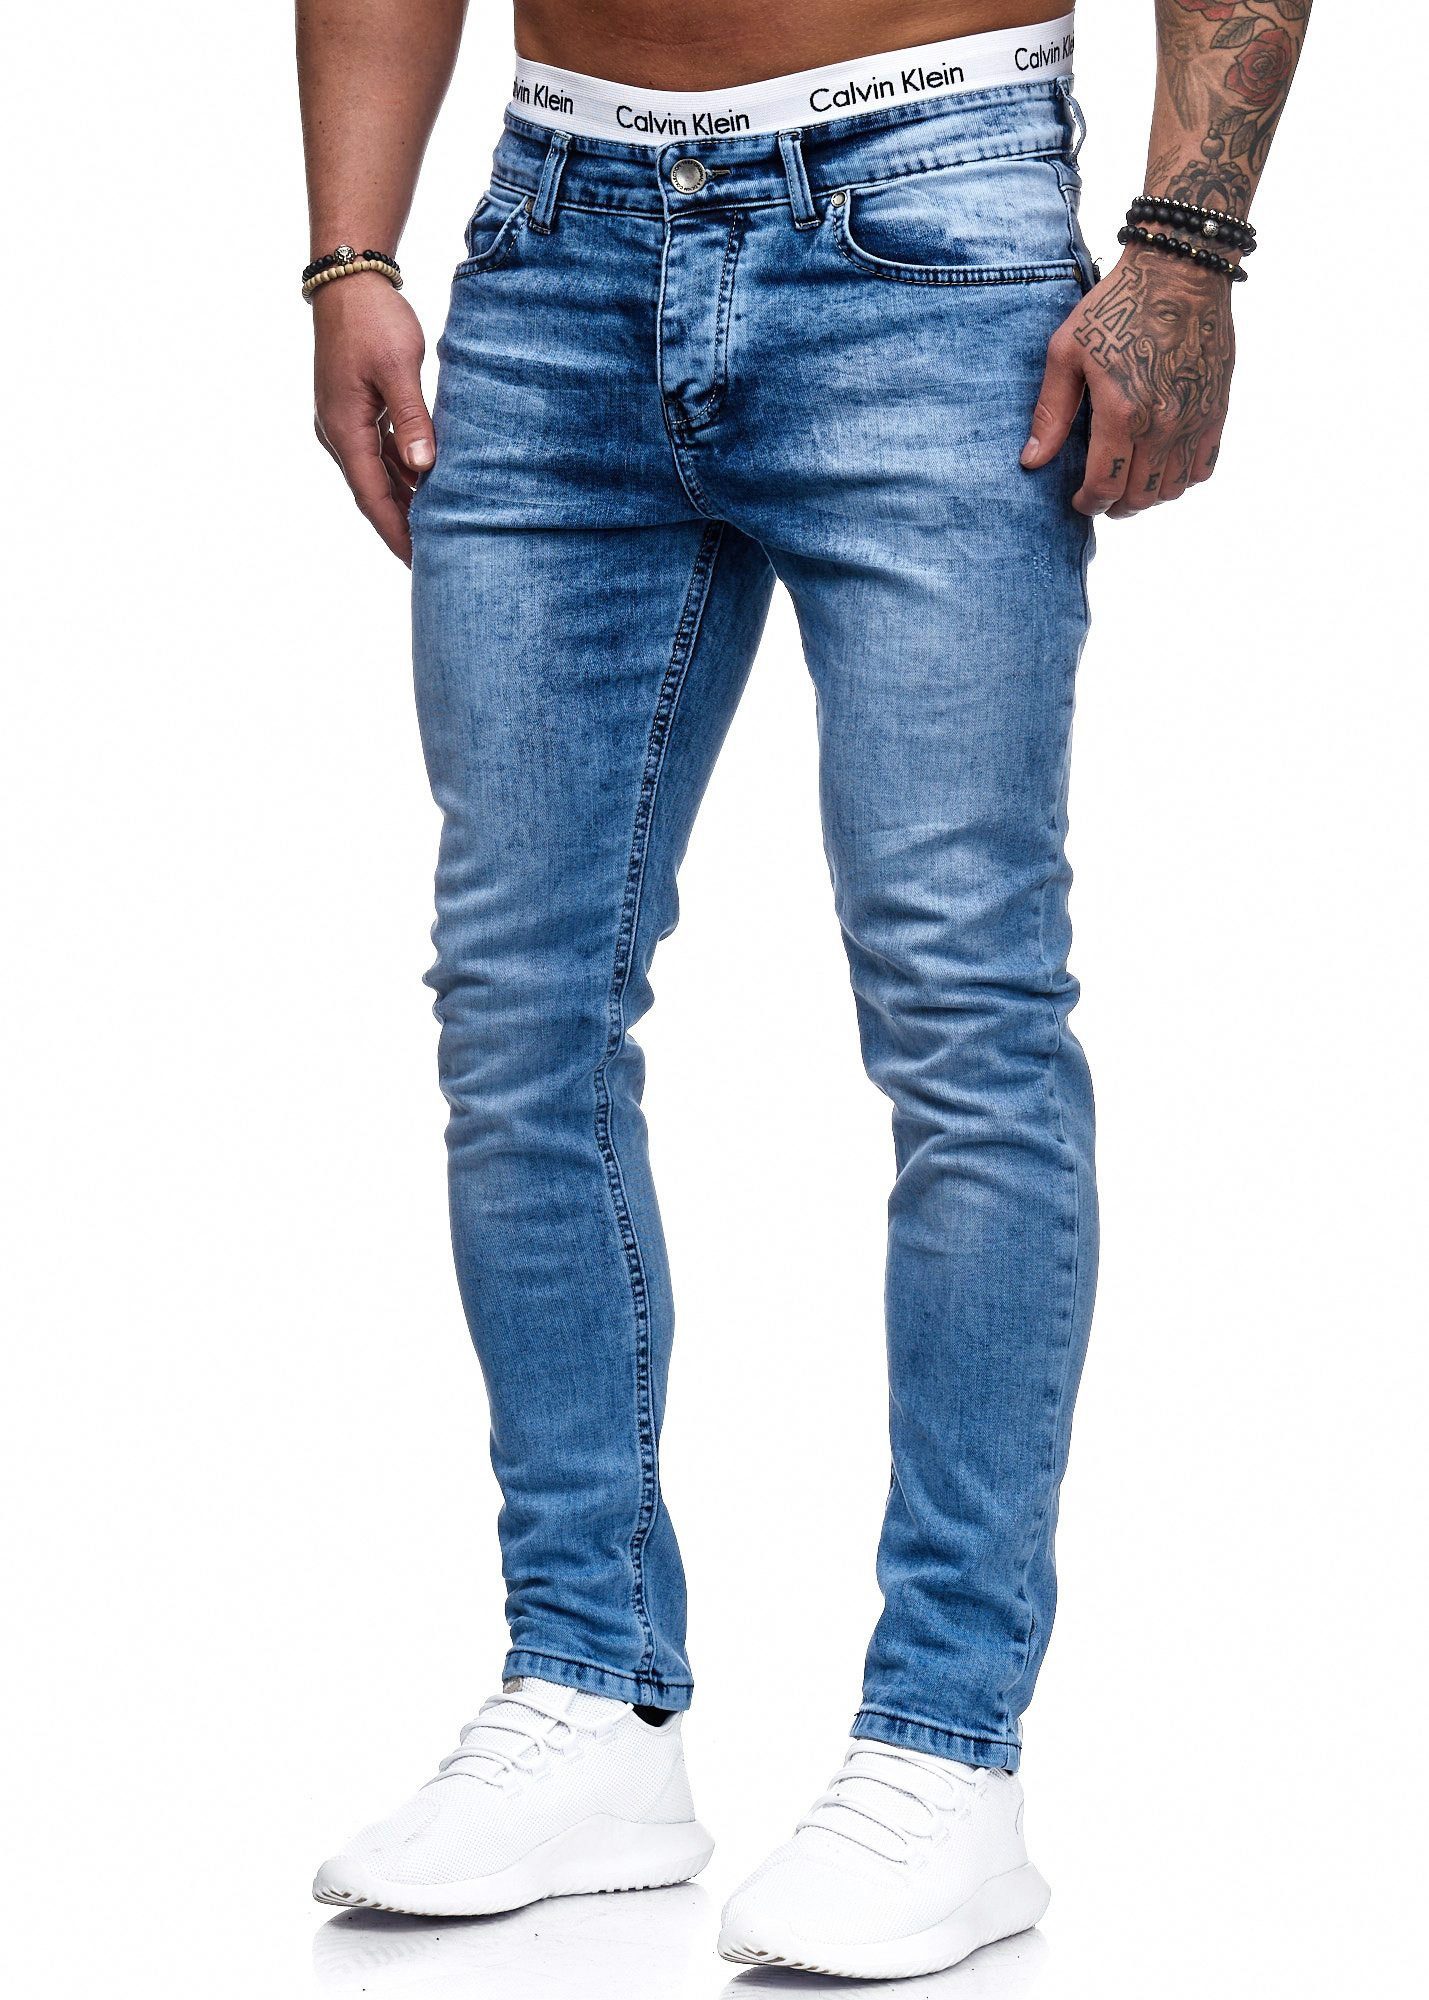 5080 Hose Jeans Hellblau Designer Basic Stretch Chino Herren Fit Slim-fit-Jeans Code47 Jeanshose Slim